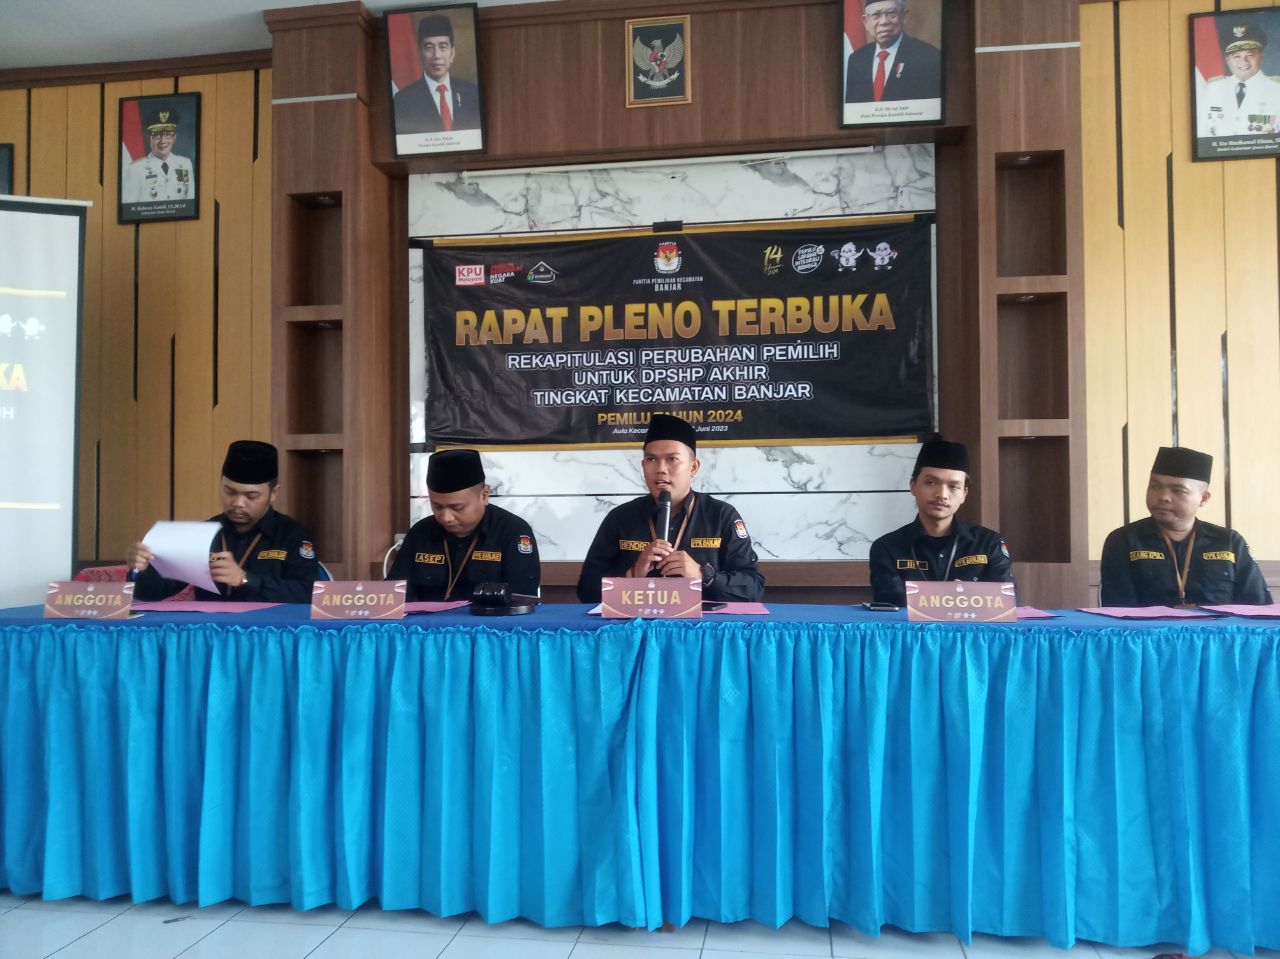 rapat pleno terbuka rekap DPSHP akhir tingkat PPK se Kota Banjar